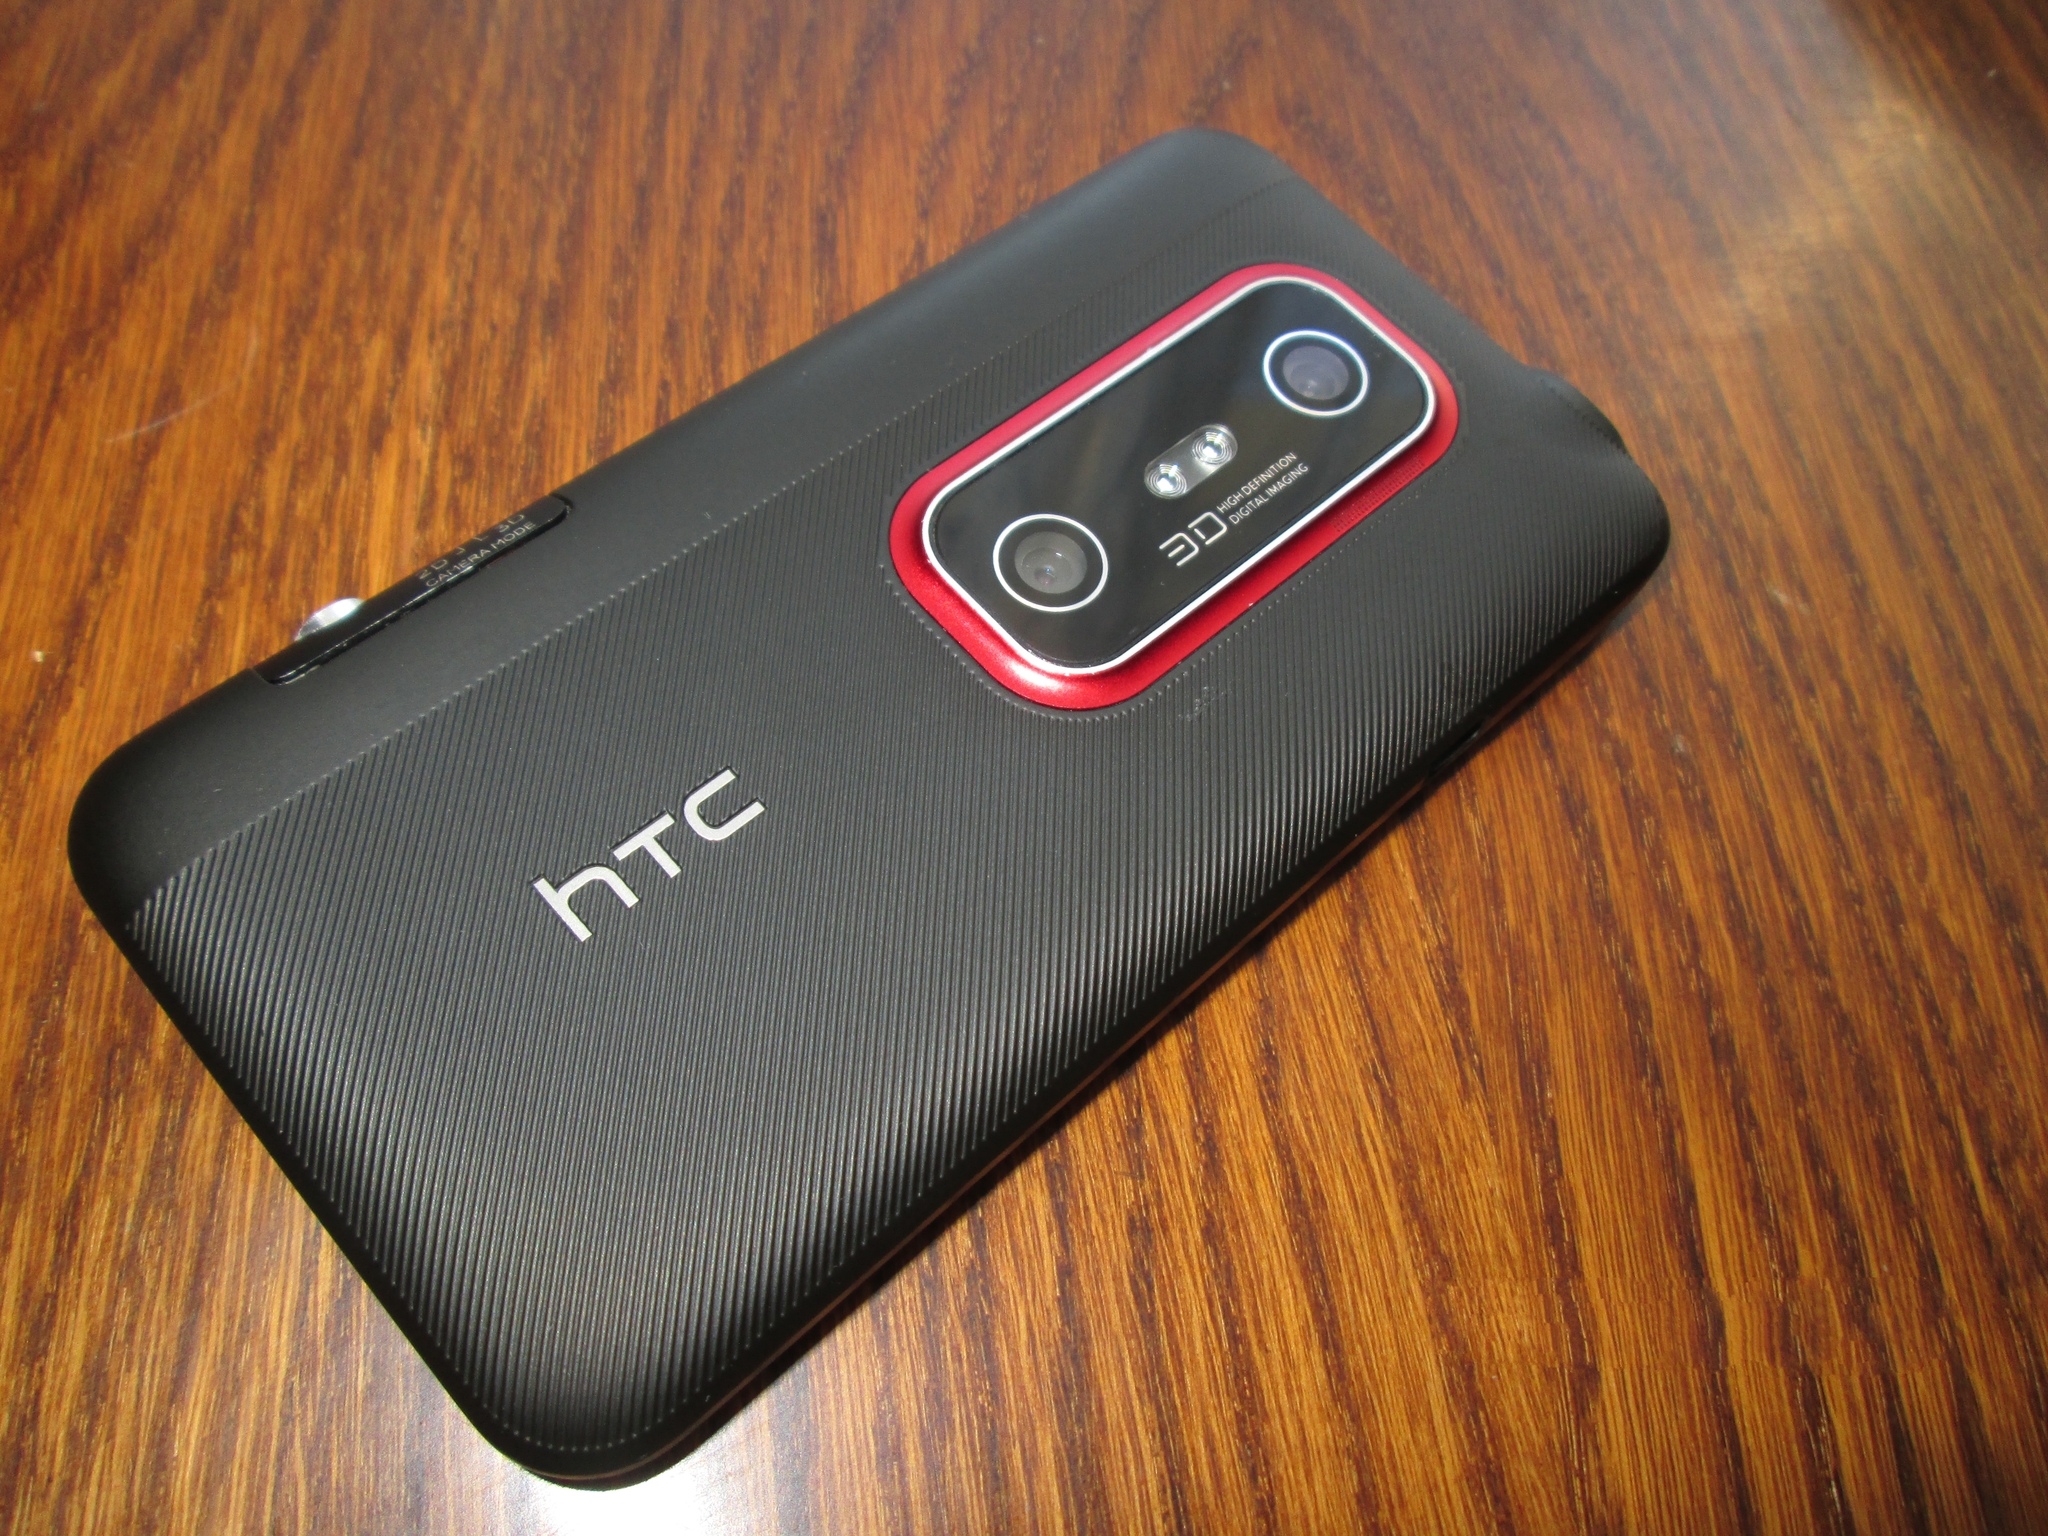 Камера HTC EVO 3D днем (camera test day) (HD, 720p)